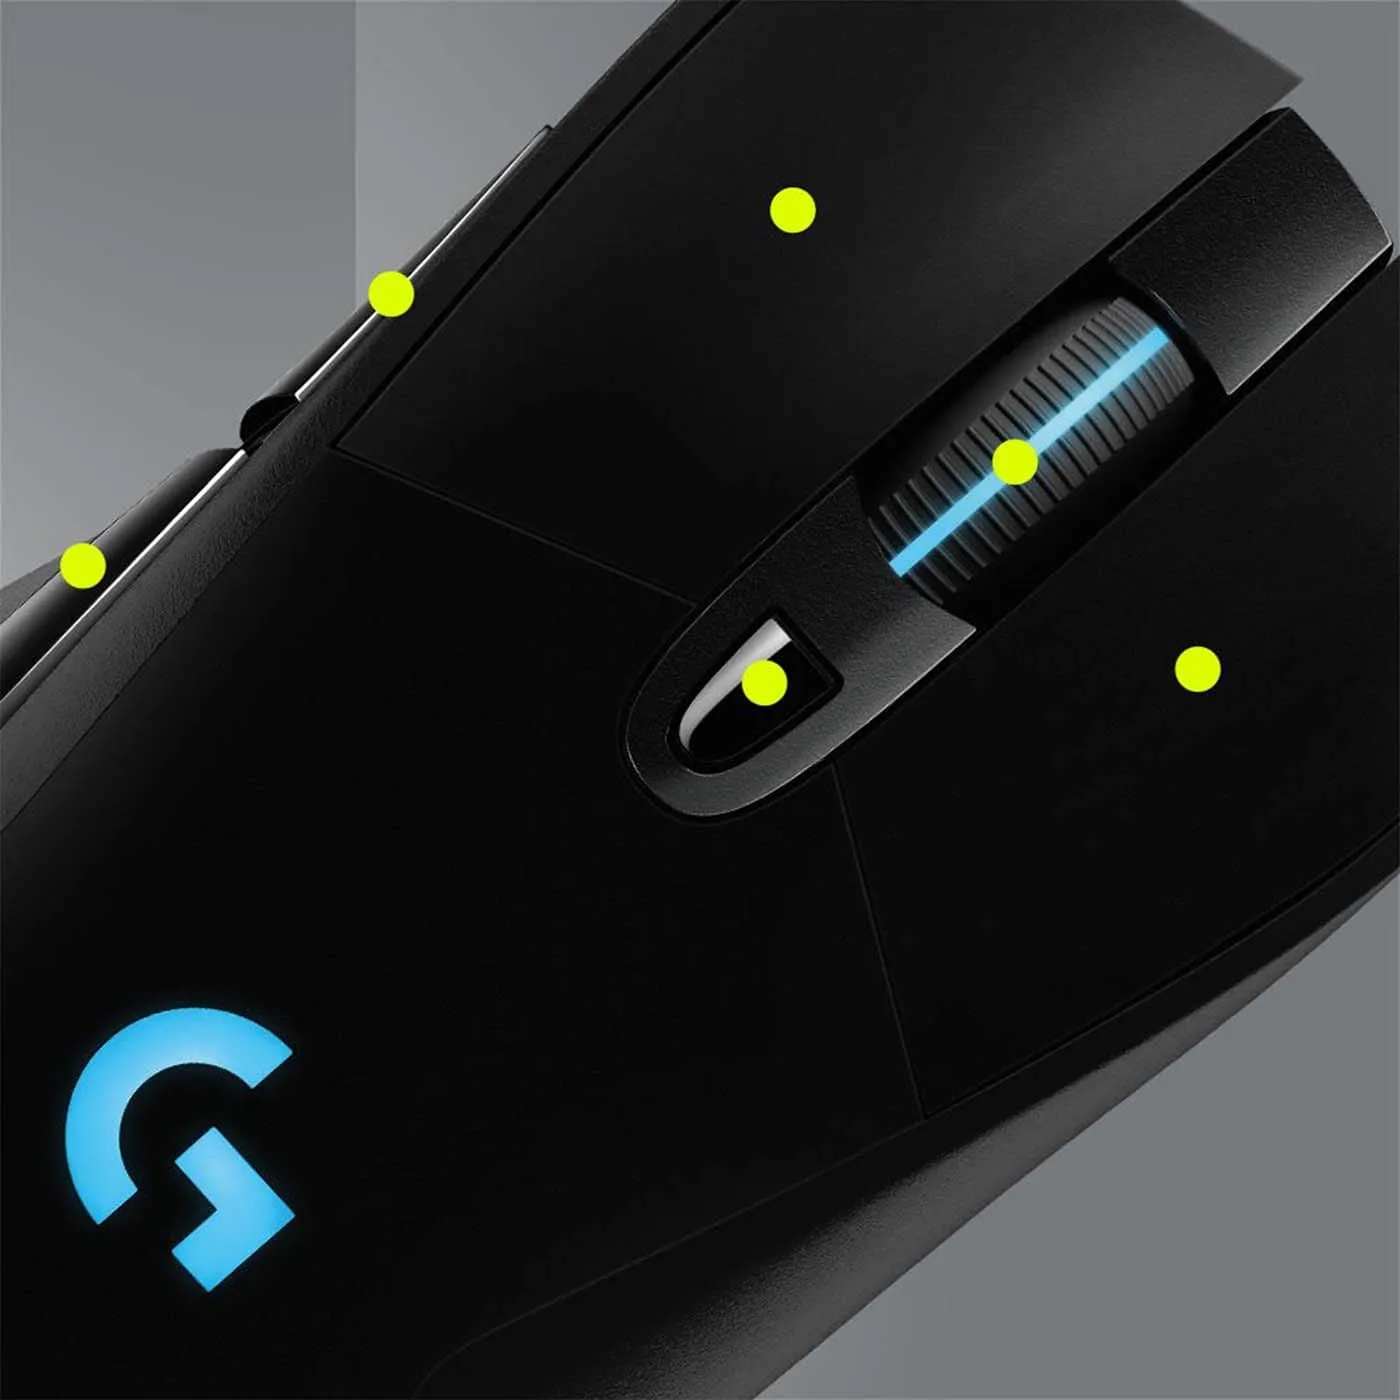 Mouse LOGITECH G Inalámbrico Gaming Lightspeed G703 Negro